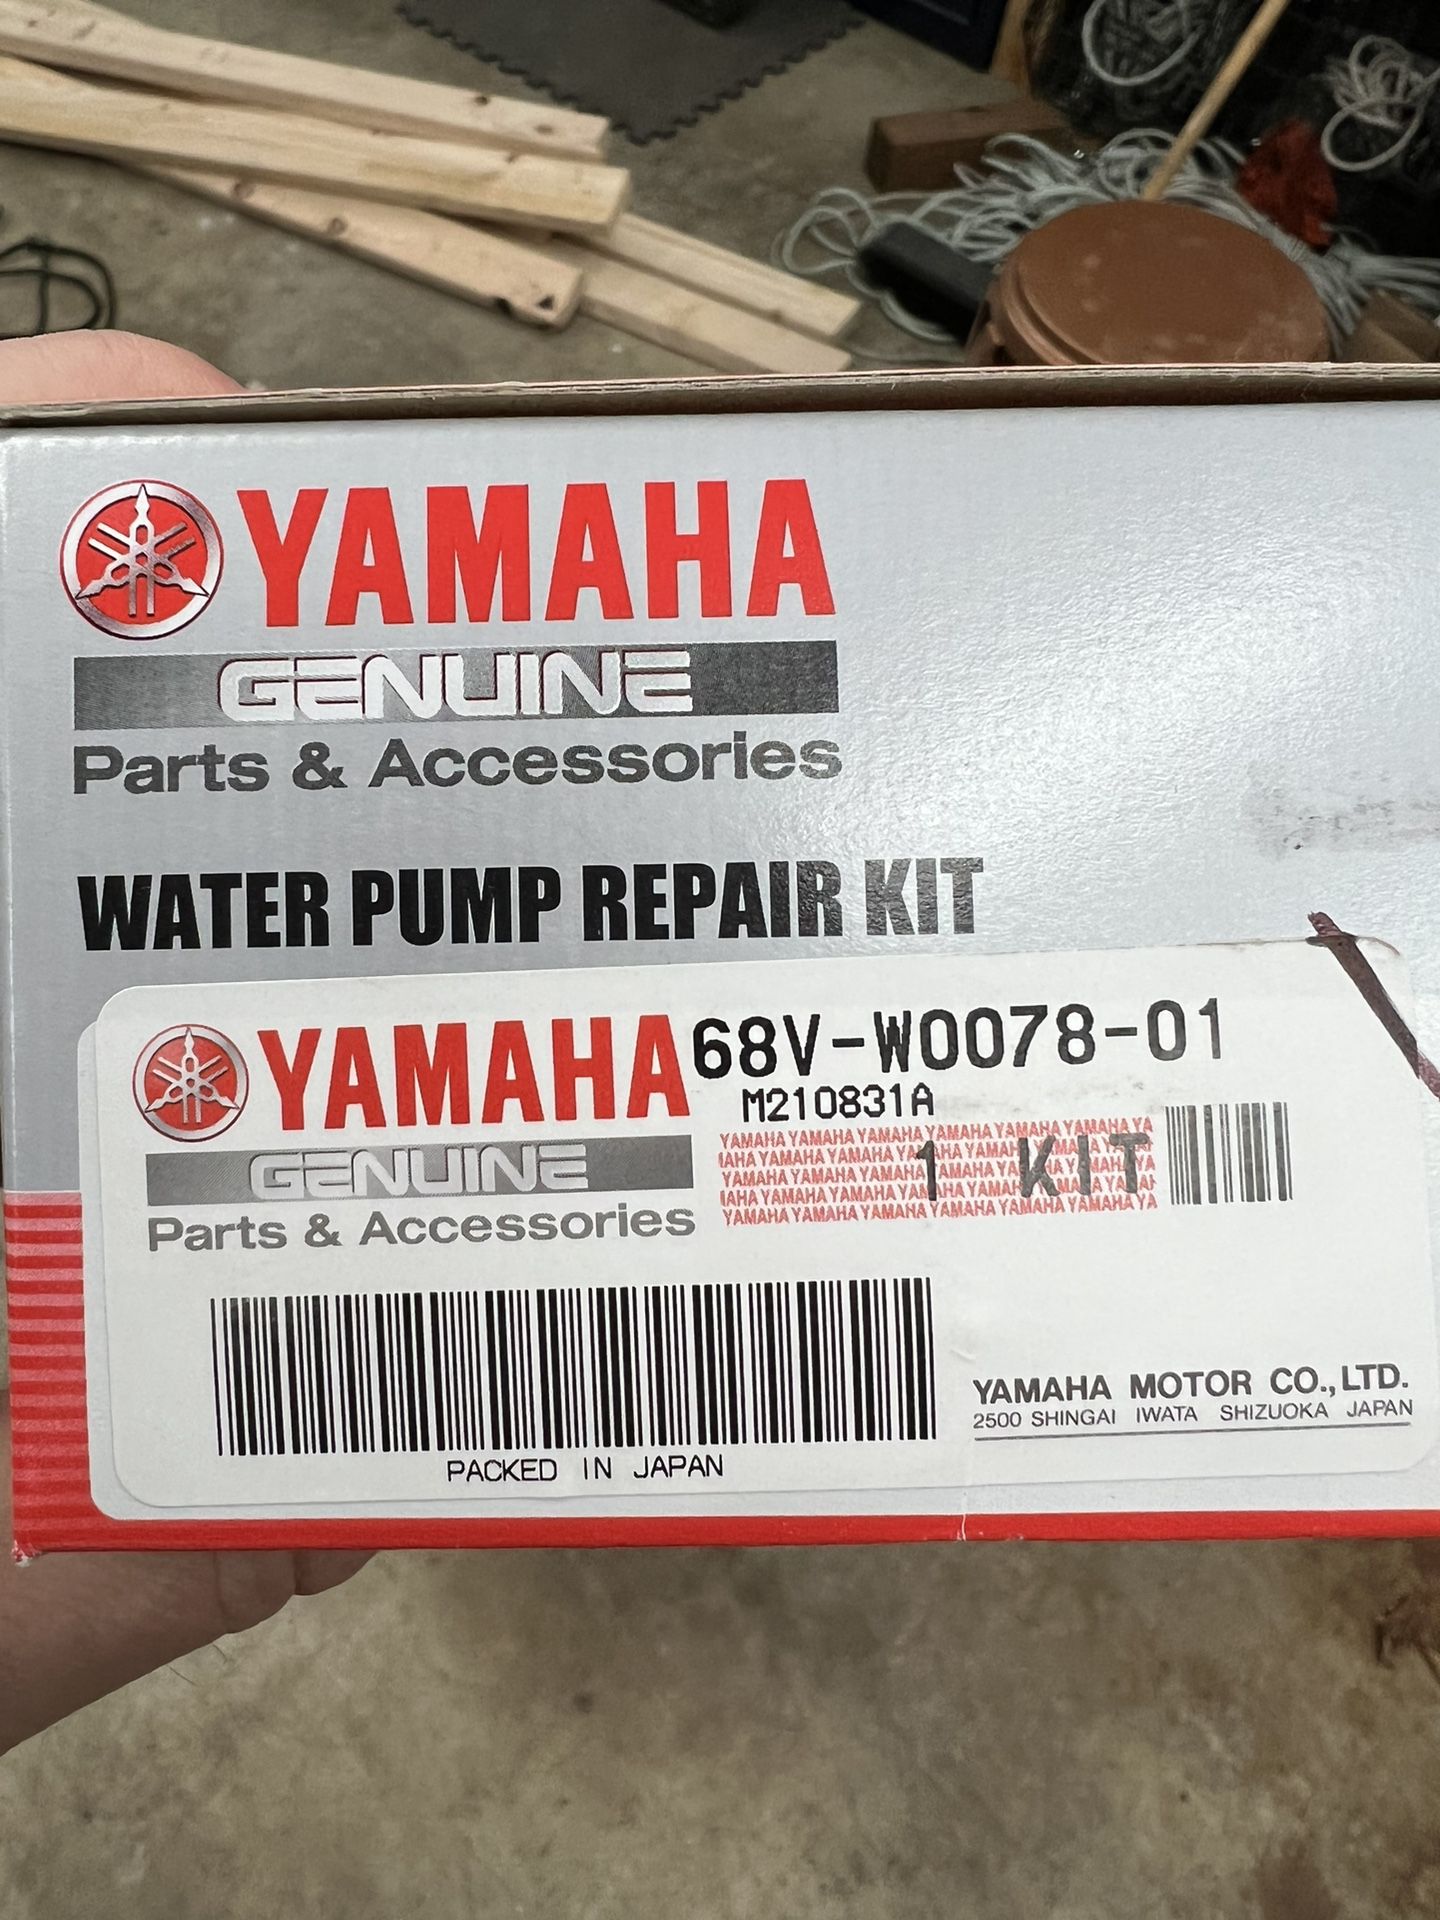 Yamaha Outboard Water pump Kit 